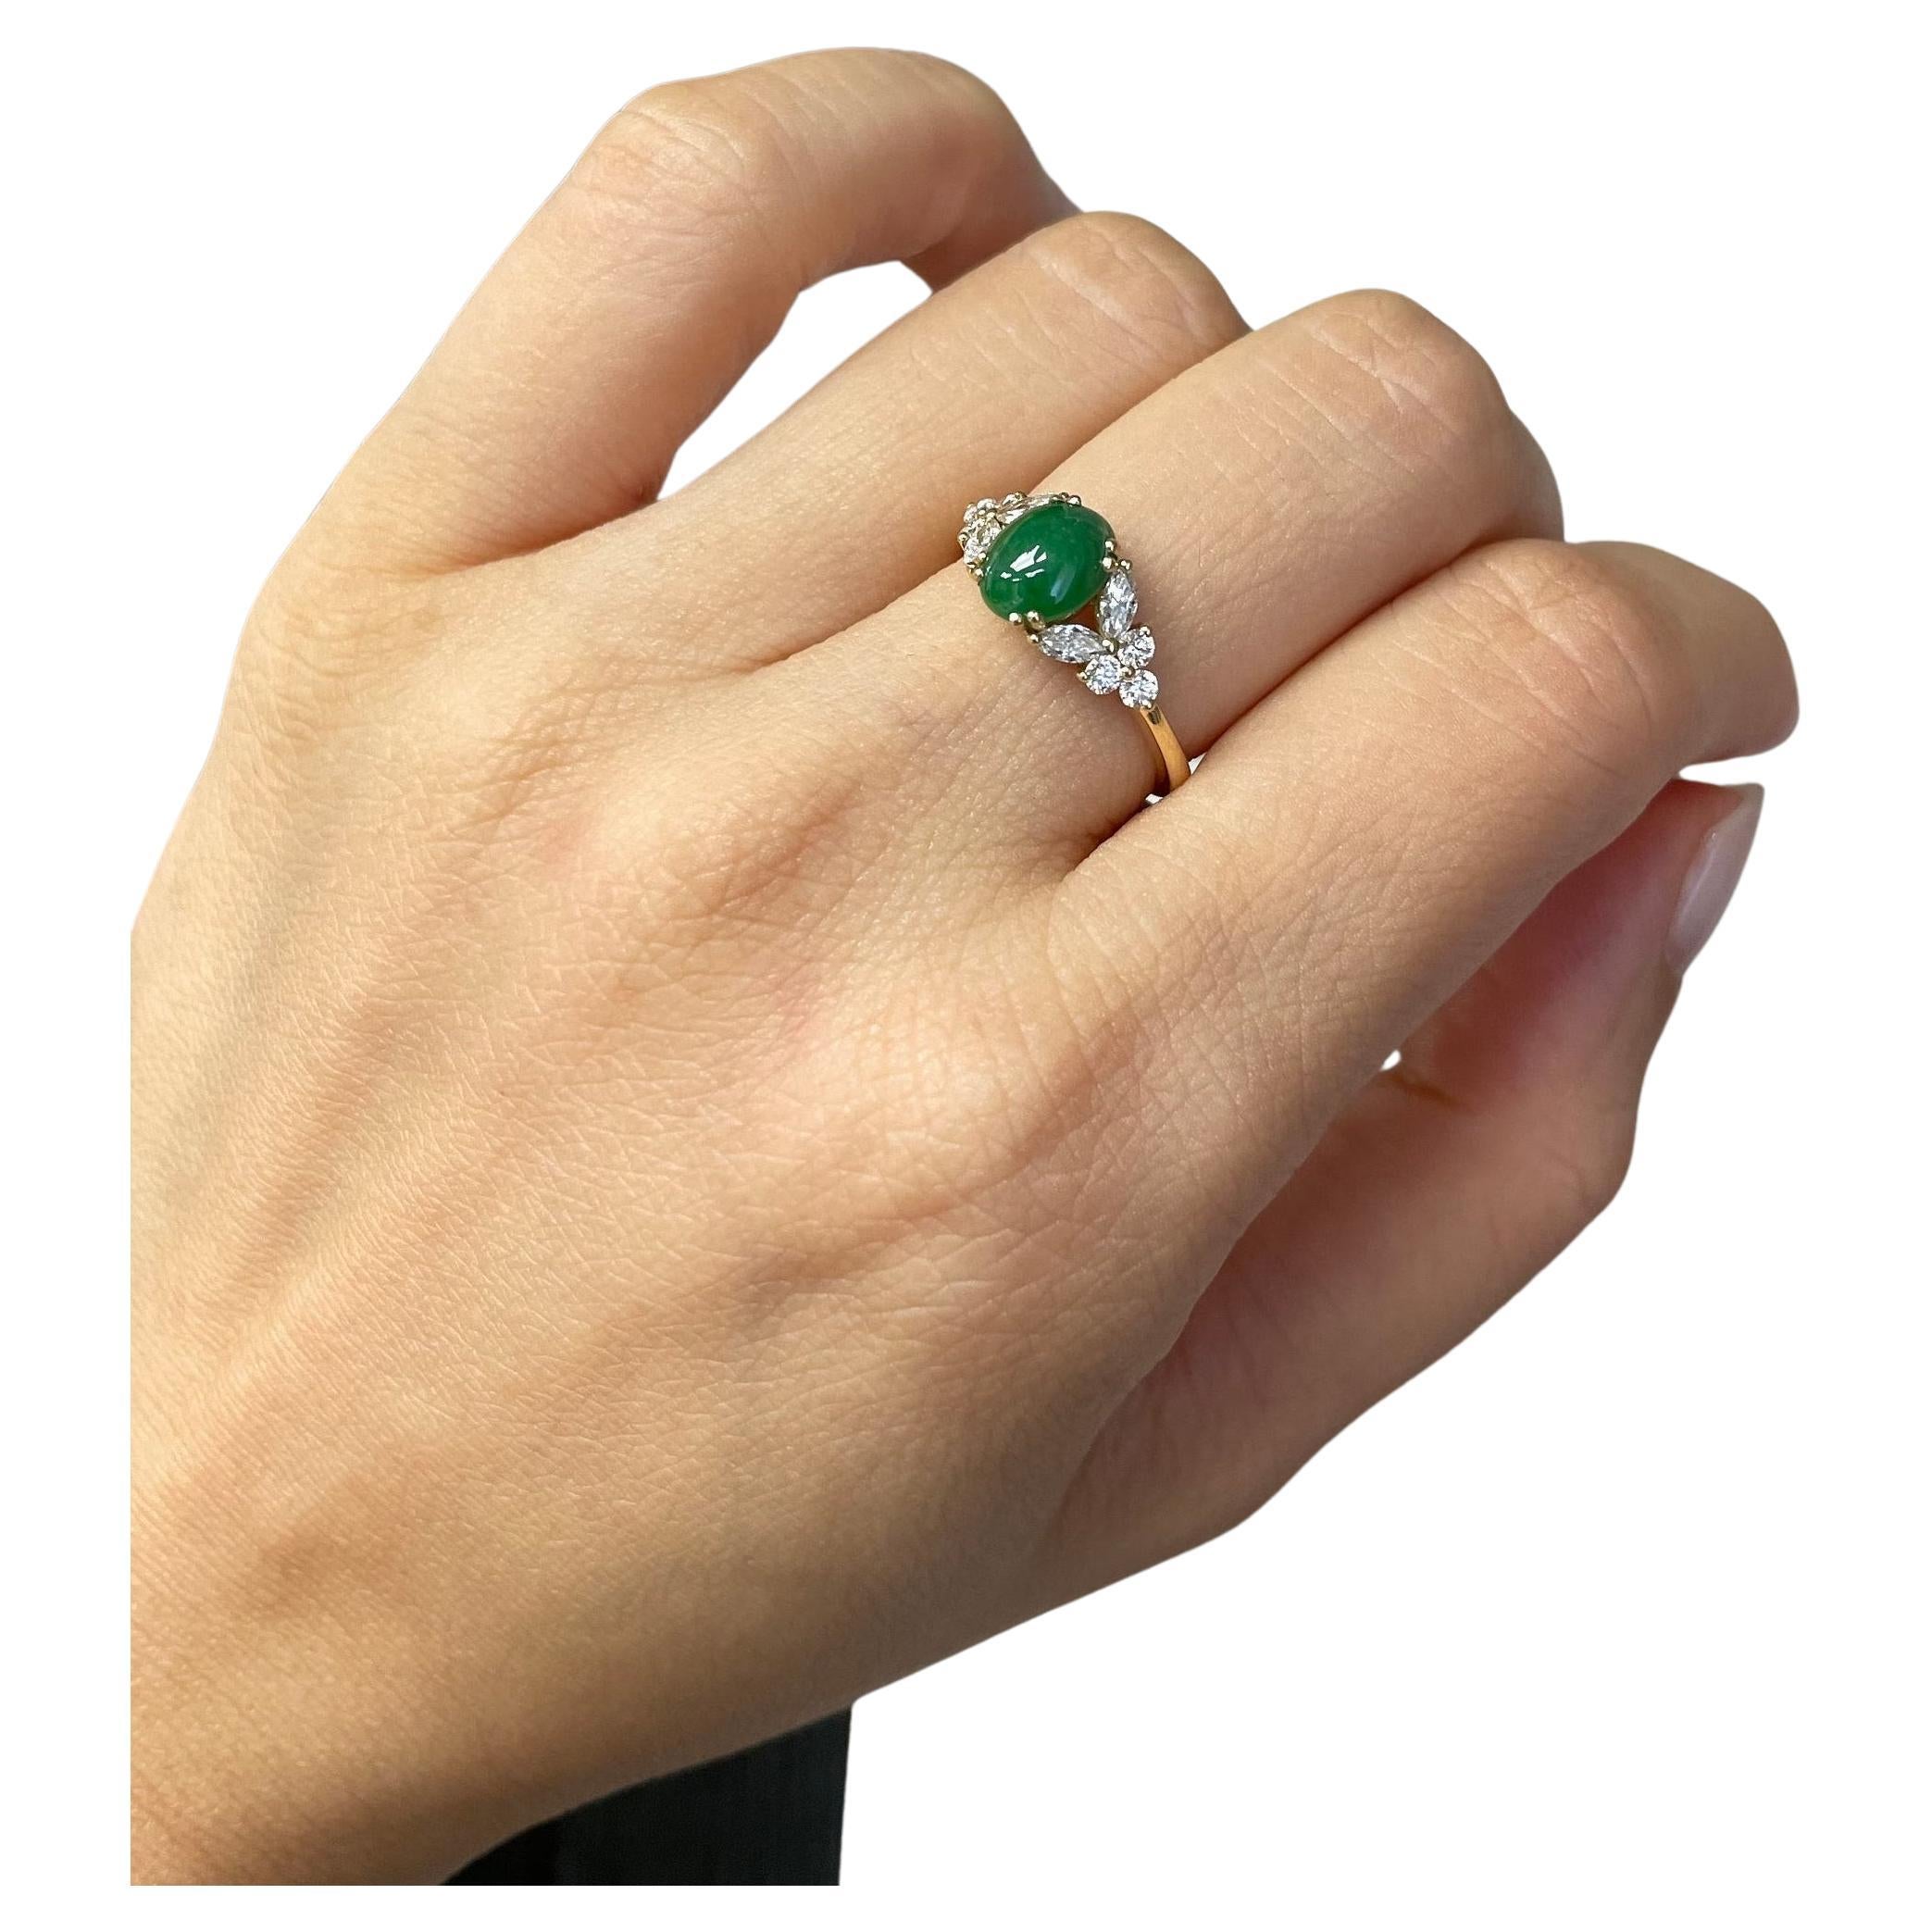 Bague en jade vert naturel avec accents de diamants marquises et ronds